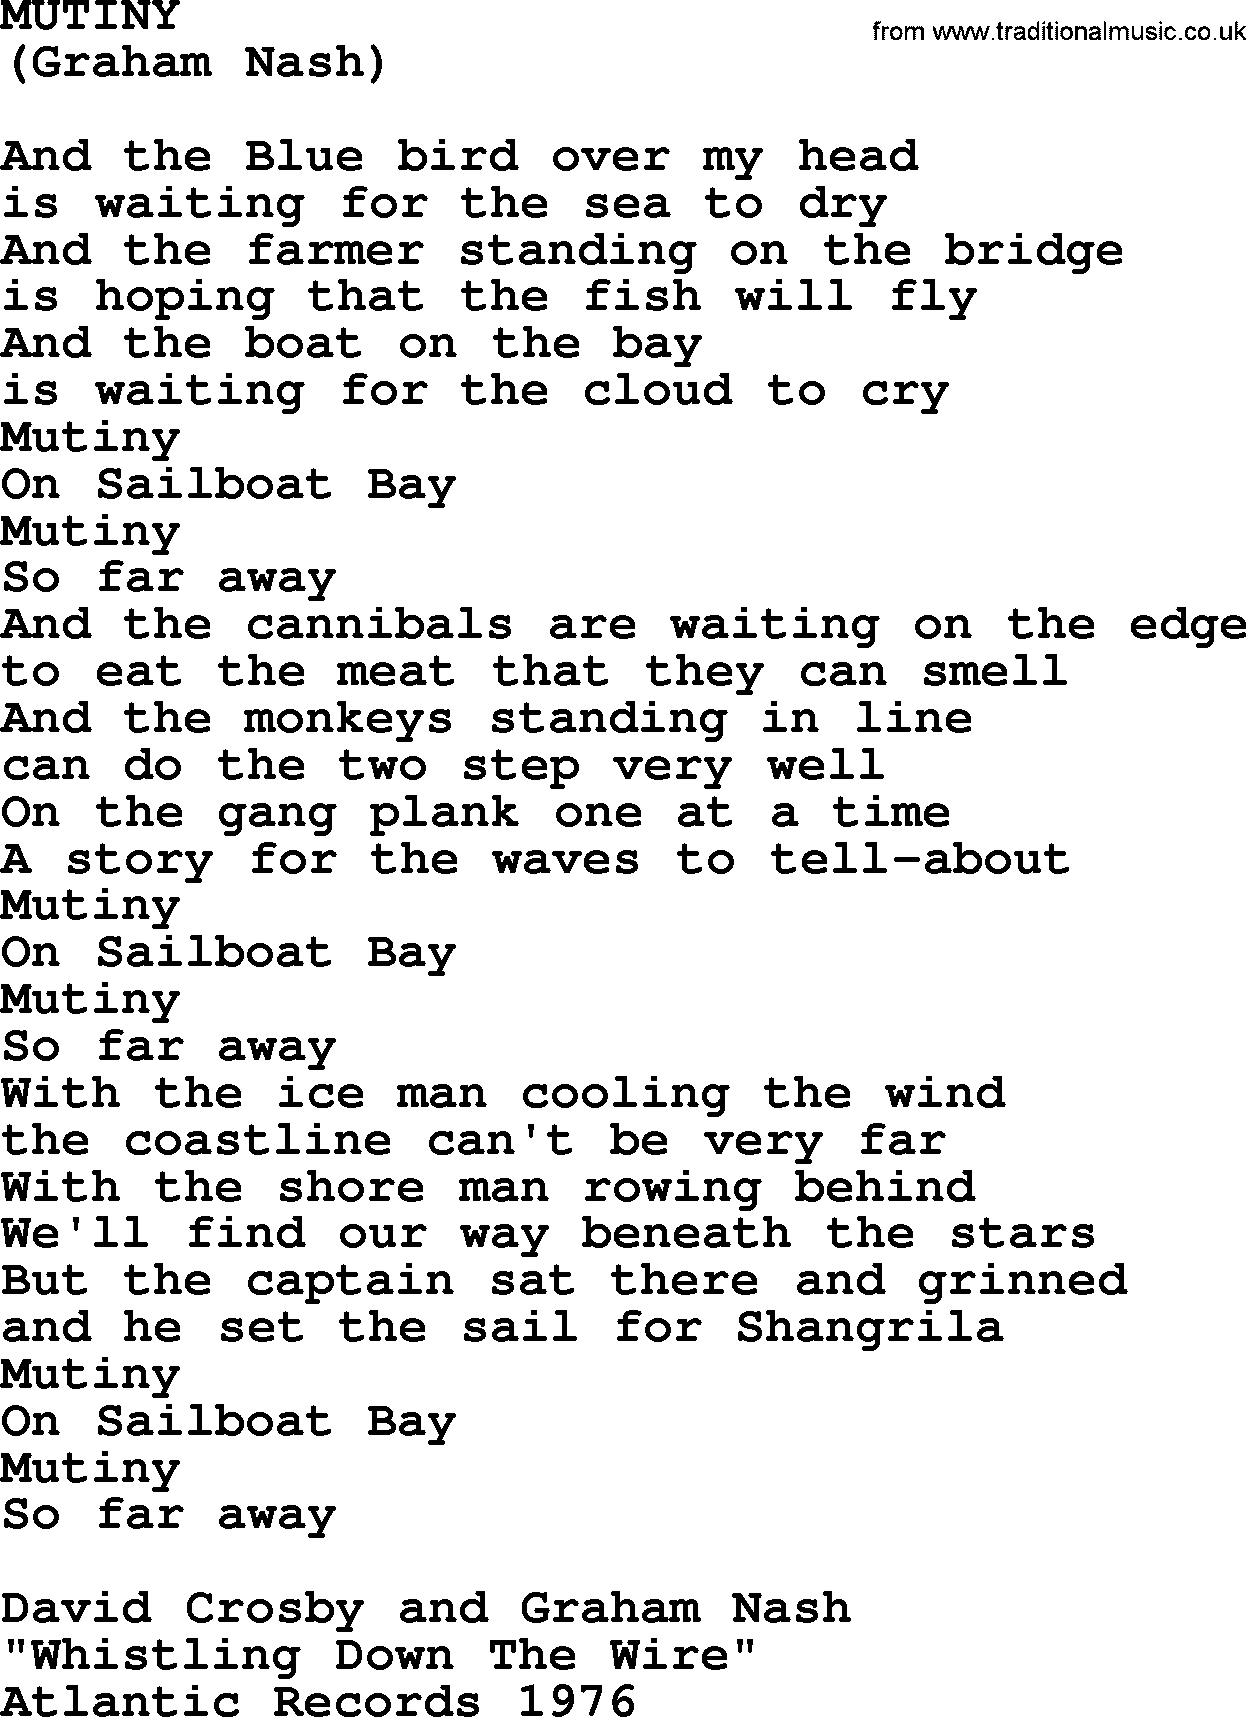 The Byrds song Mutiny, lyrics